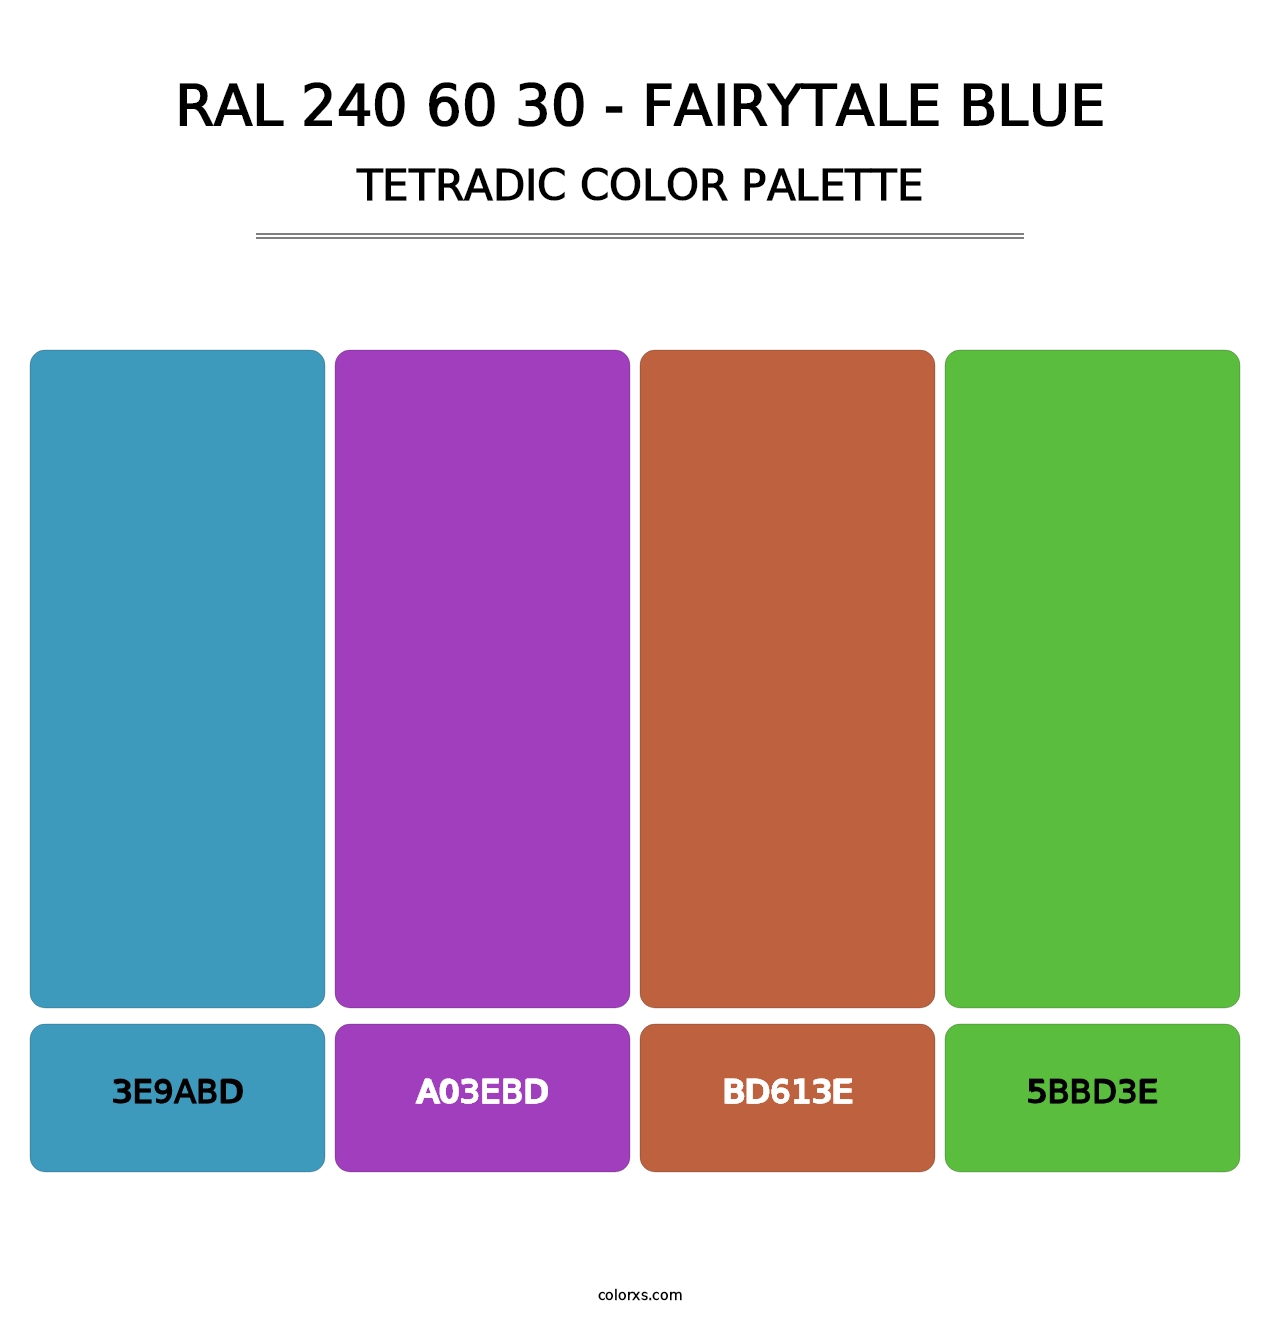 RAL 240 60 30 - Fairytale Blue - Tetradic Color Palette